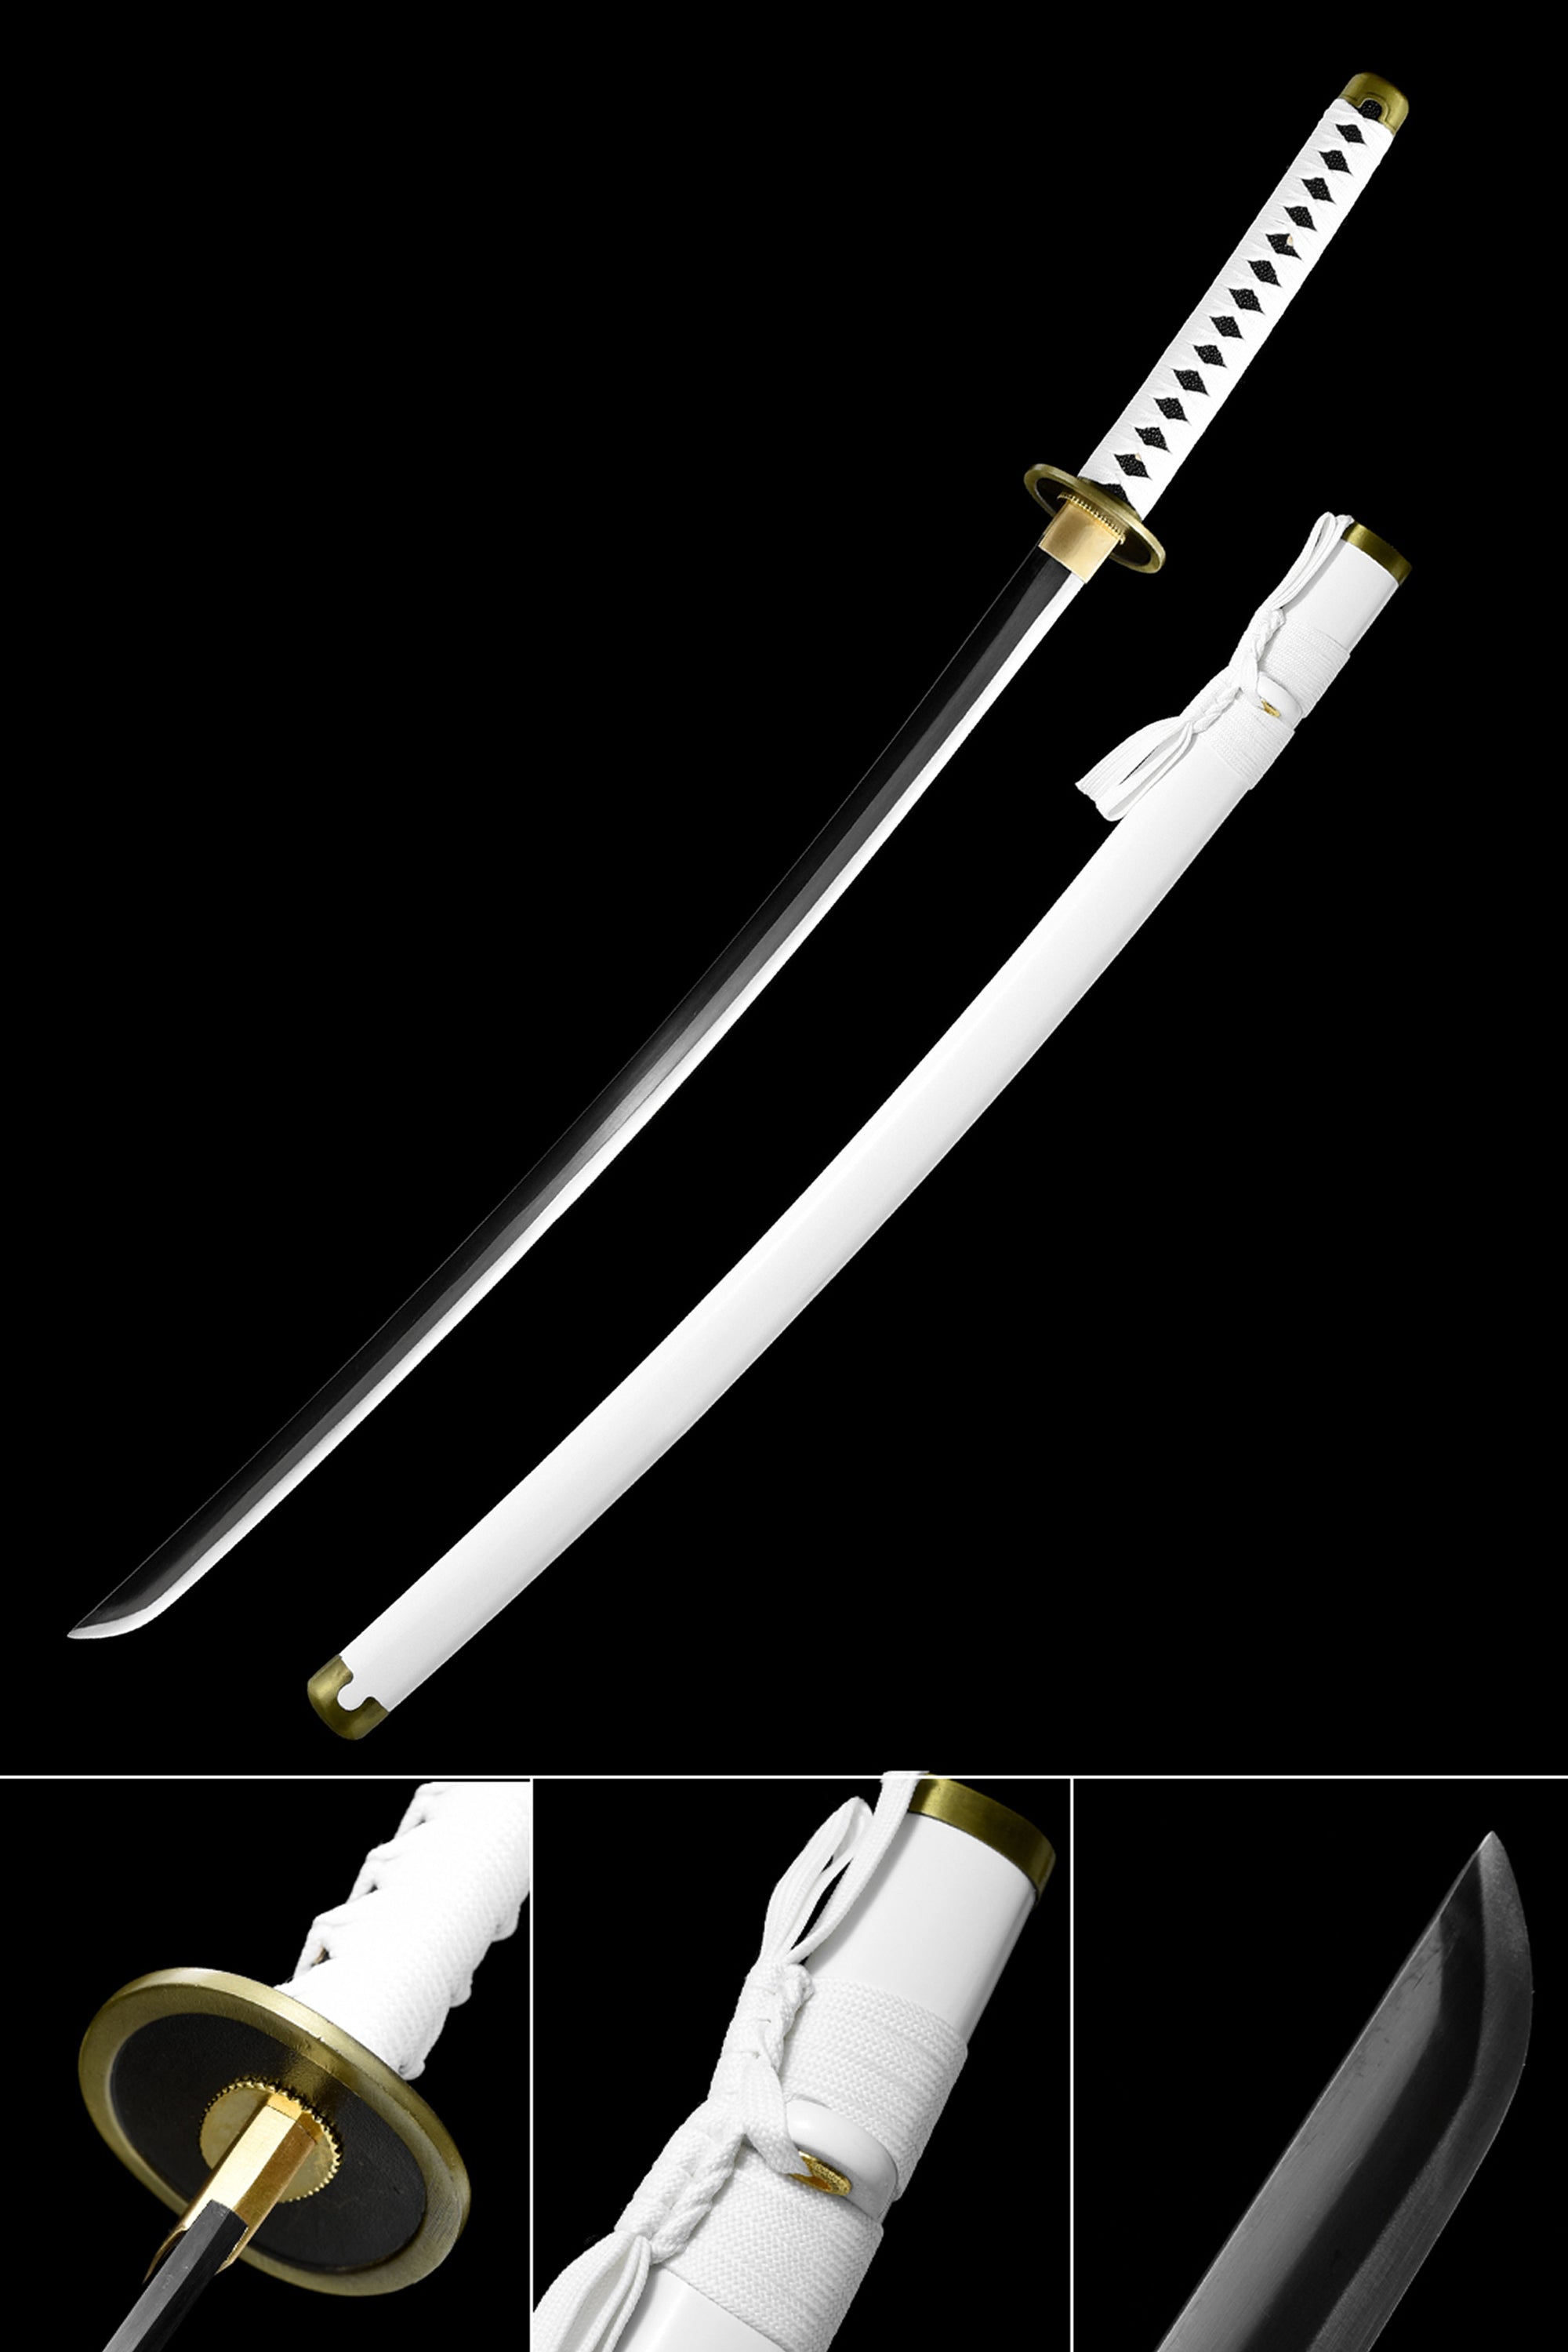 Anime Katana Sword With Scabbard (25 cm) Design 3 - Shubheksha